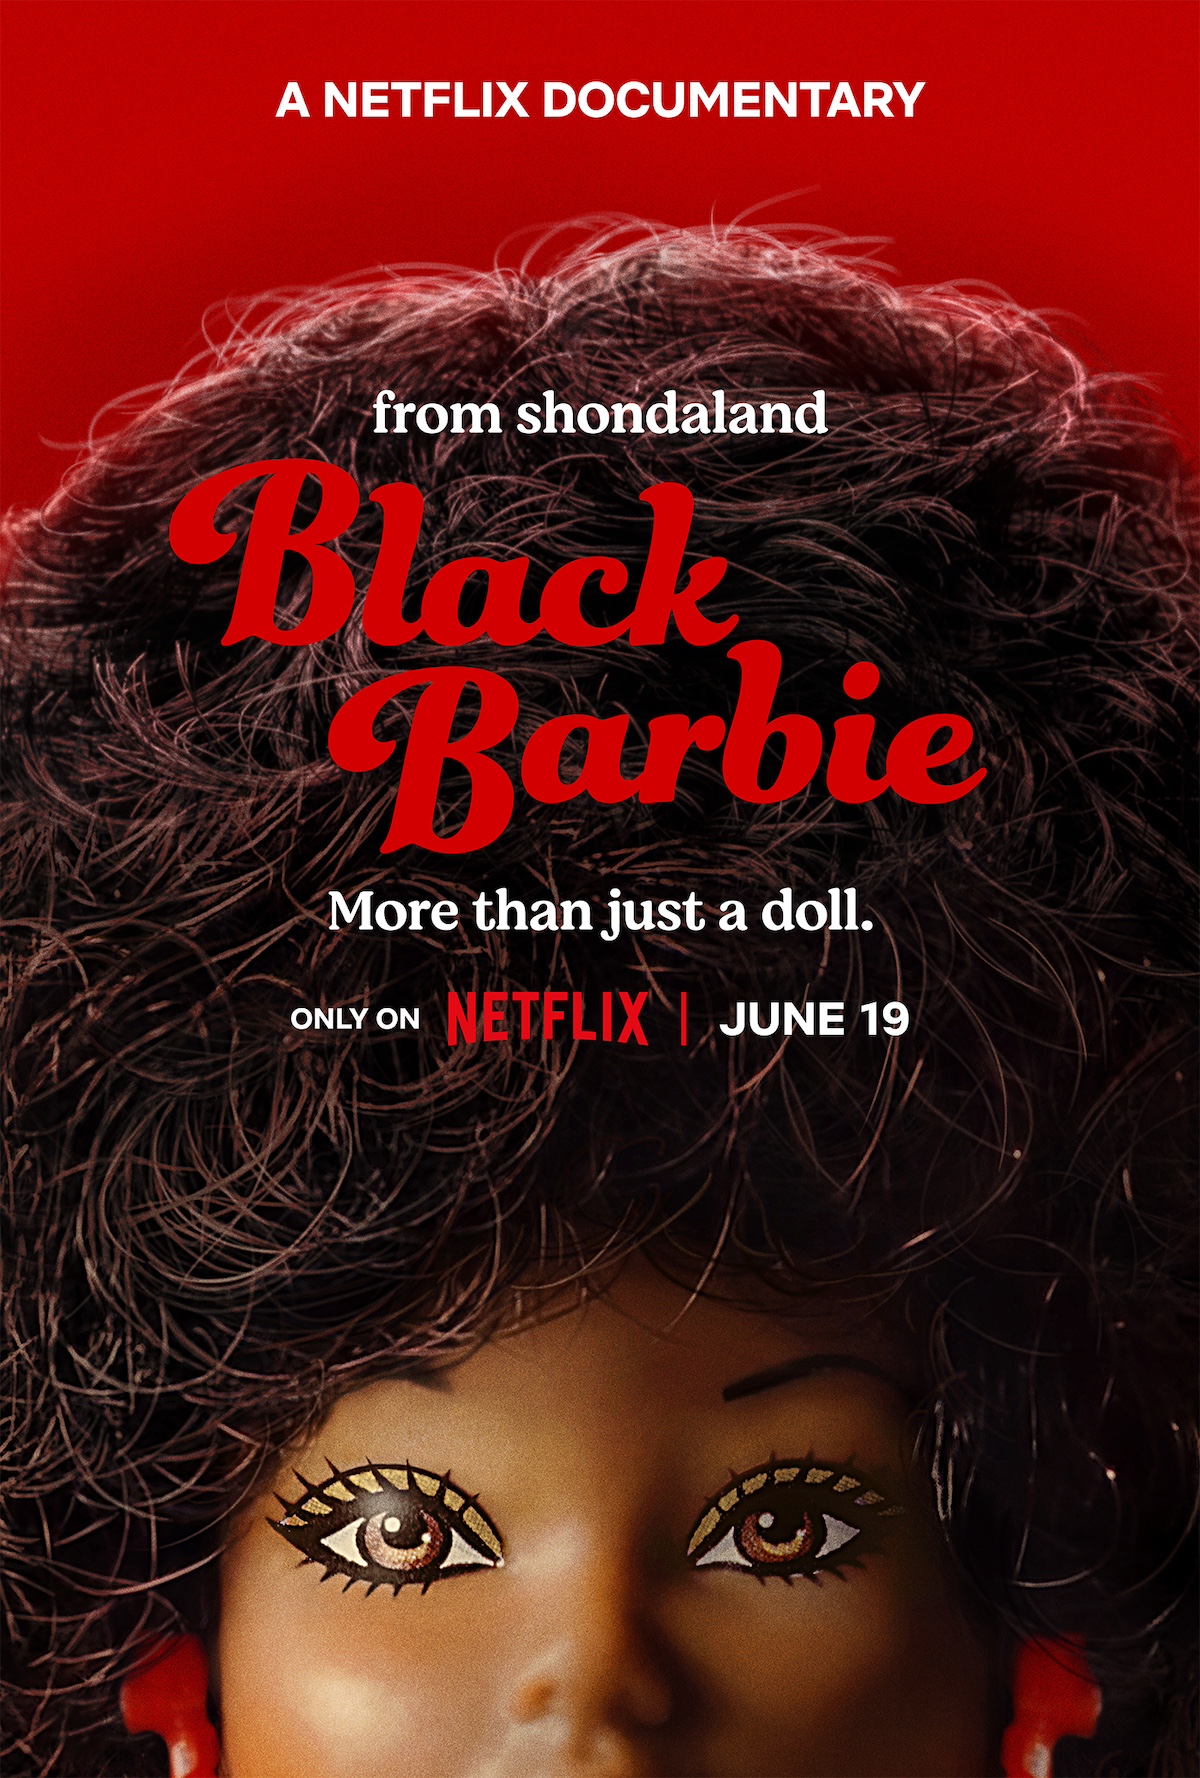 Netflix's Black Barbie